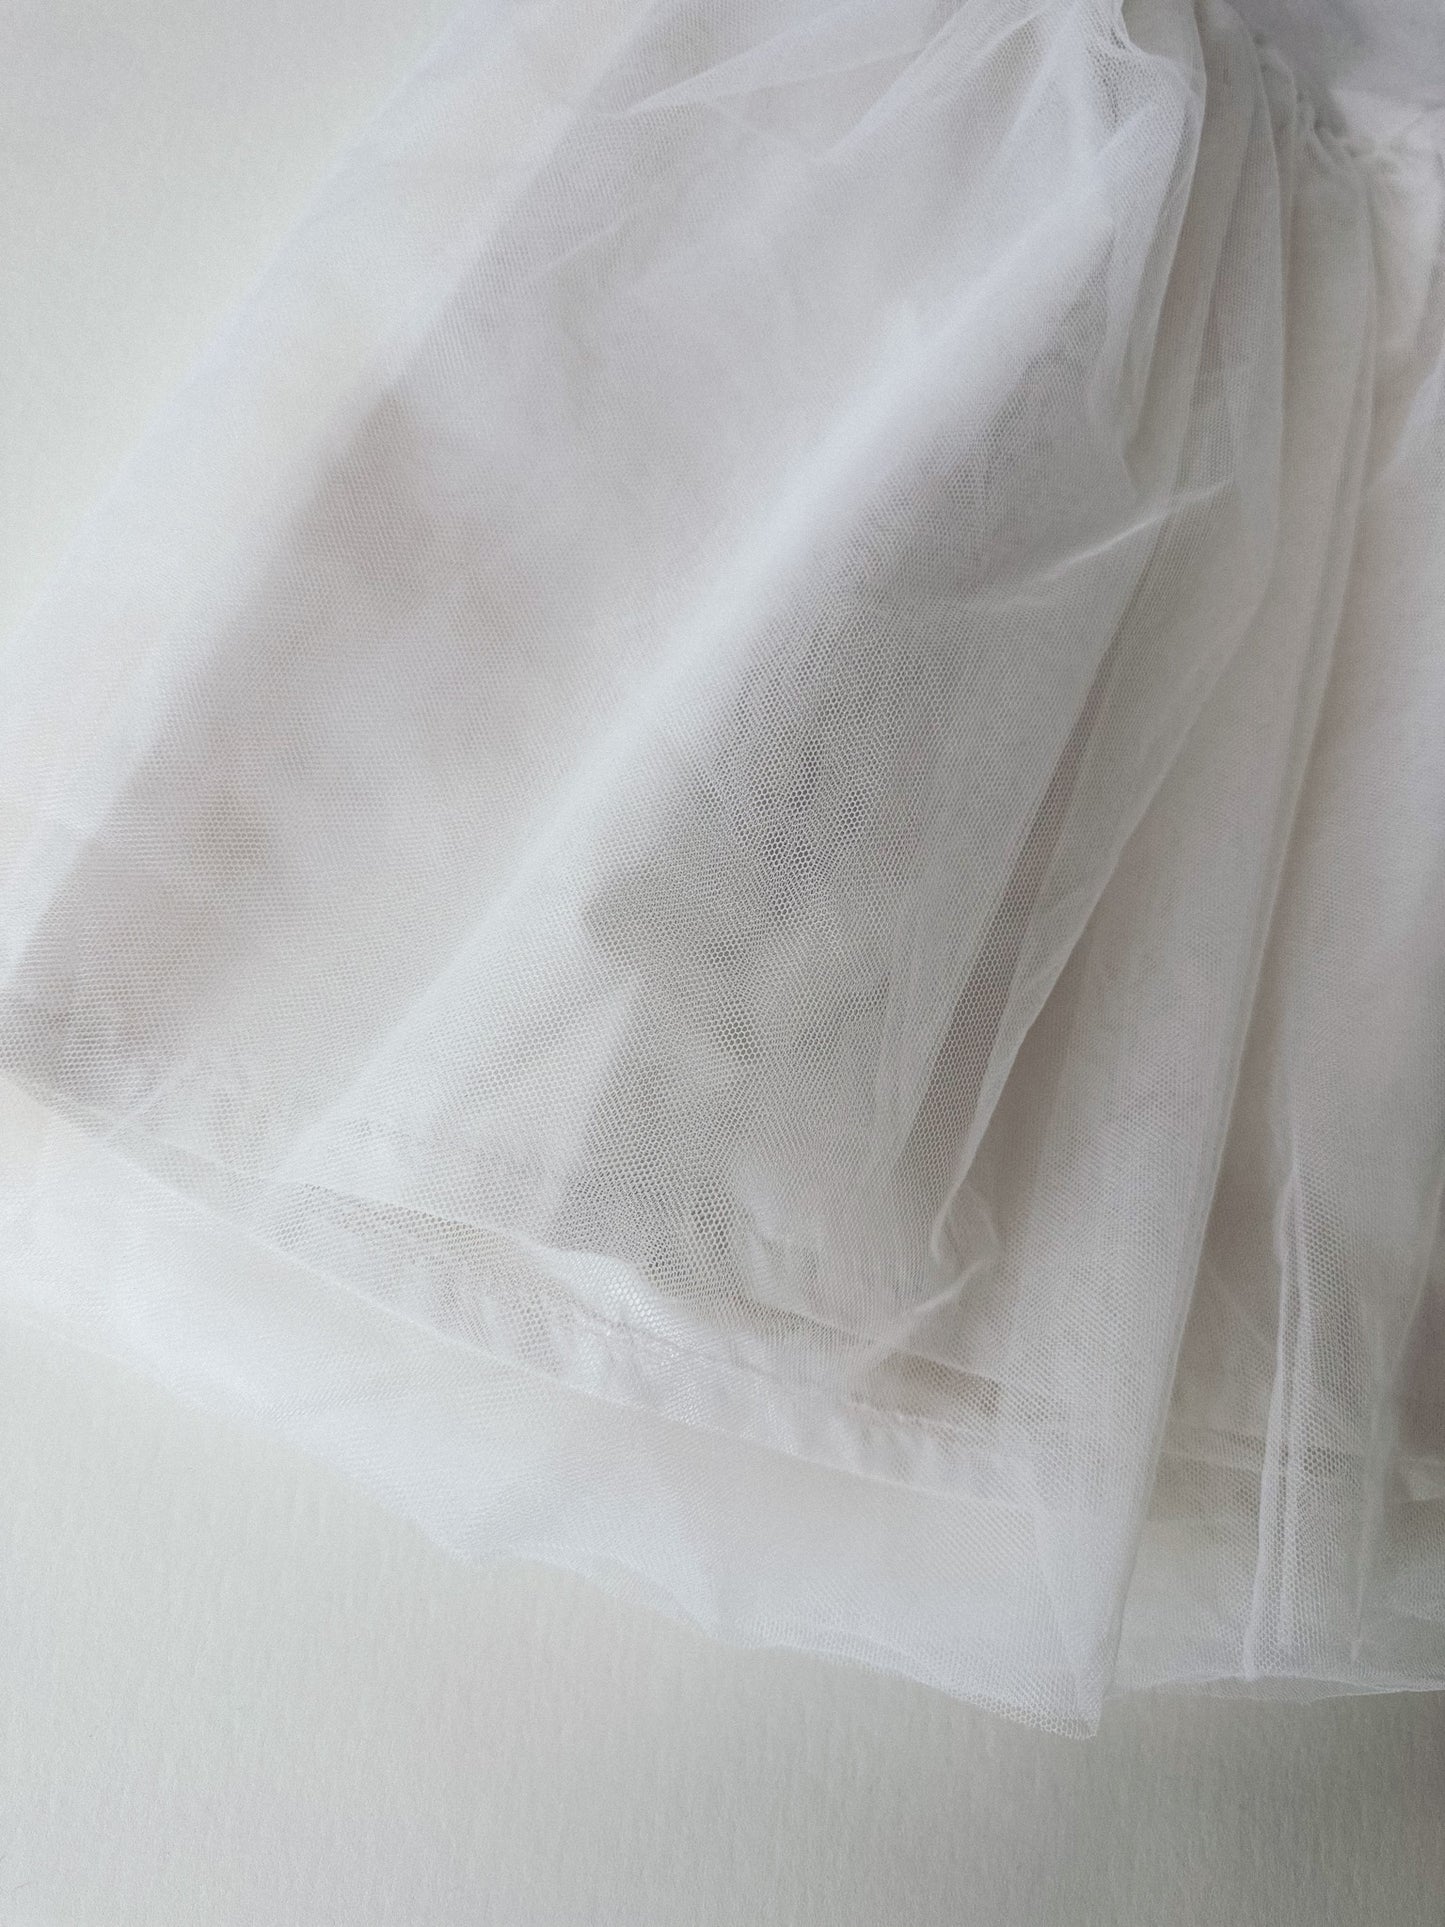 Linen and Tulle Tutu Dress - Cream